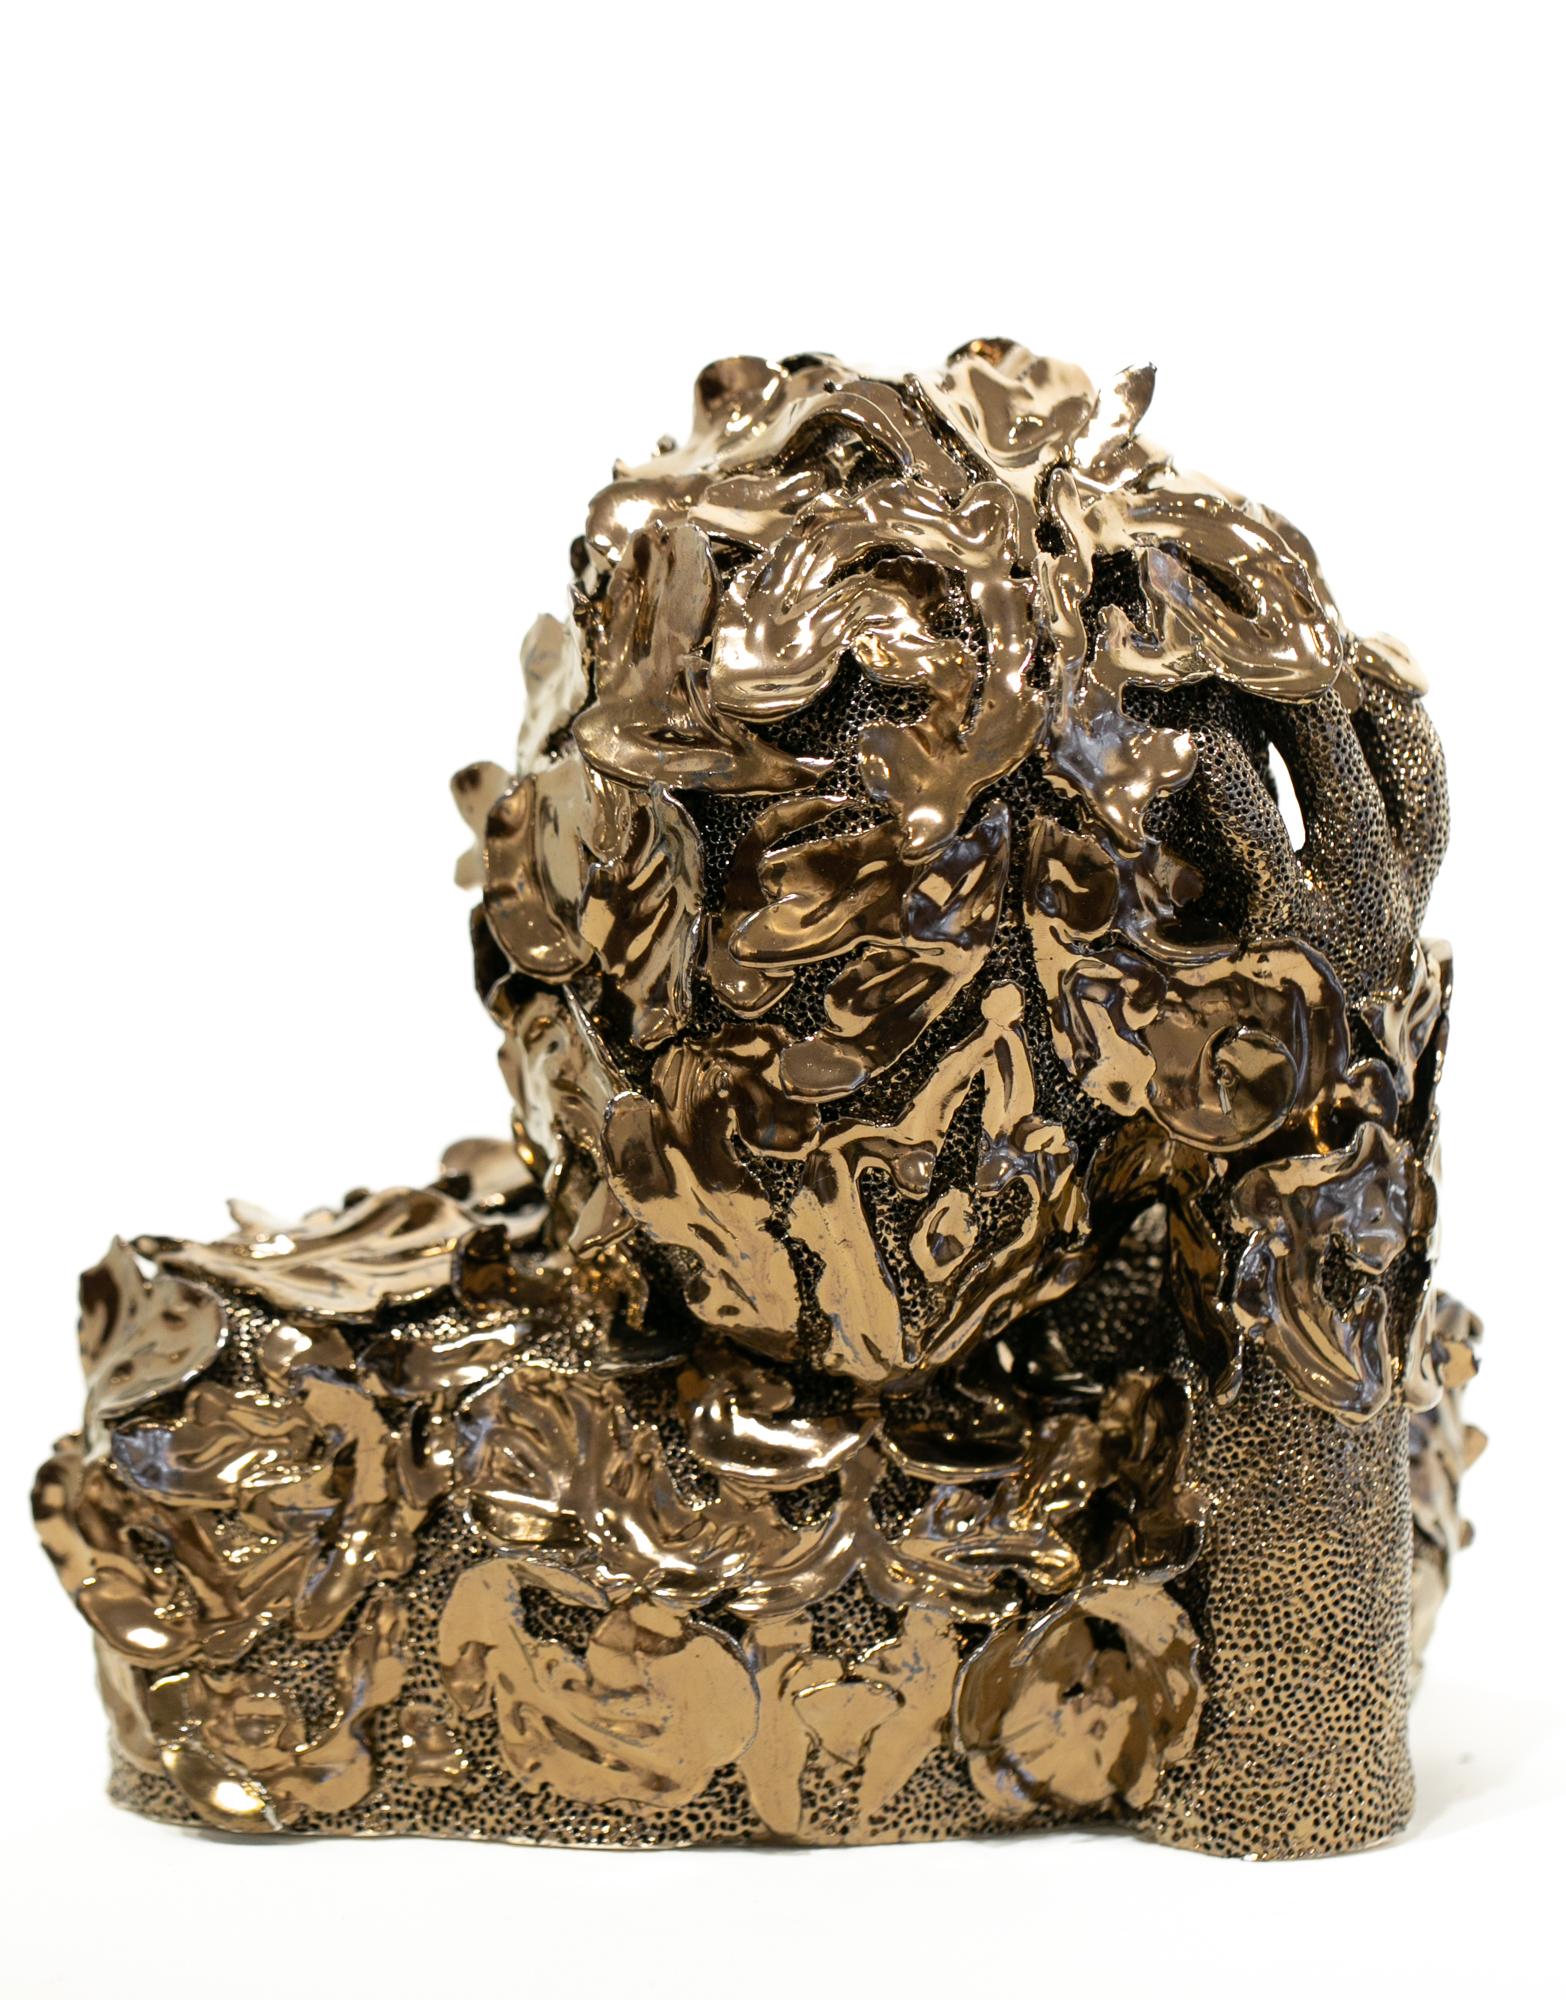 Emma Vidal Figurative Sculpture - "Swann", Metallic Floral Motif Ceramic Abstracted Bust Sculpture